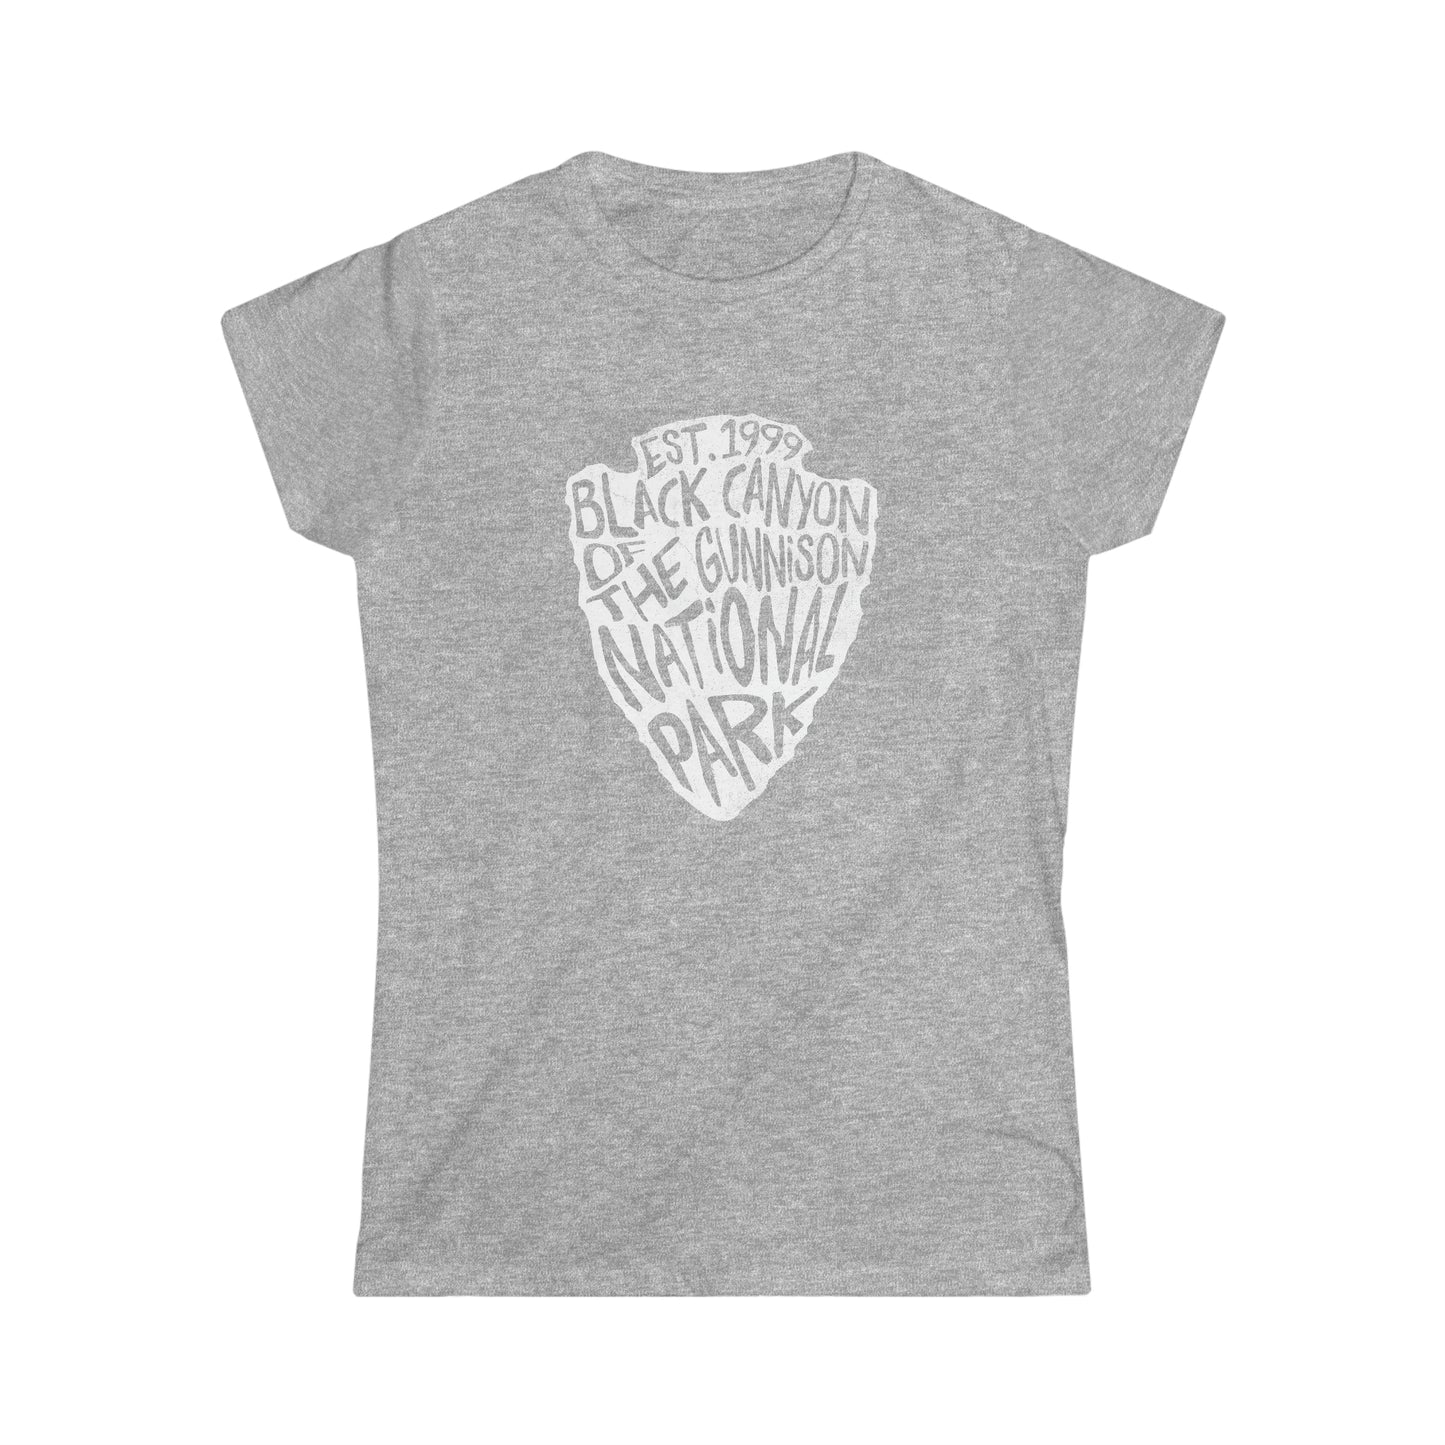 Black Canyon of the Gunnison National Park Women's T-Shirt - Arrowhead Design